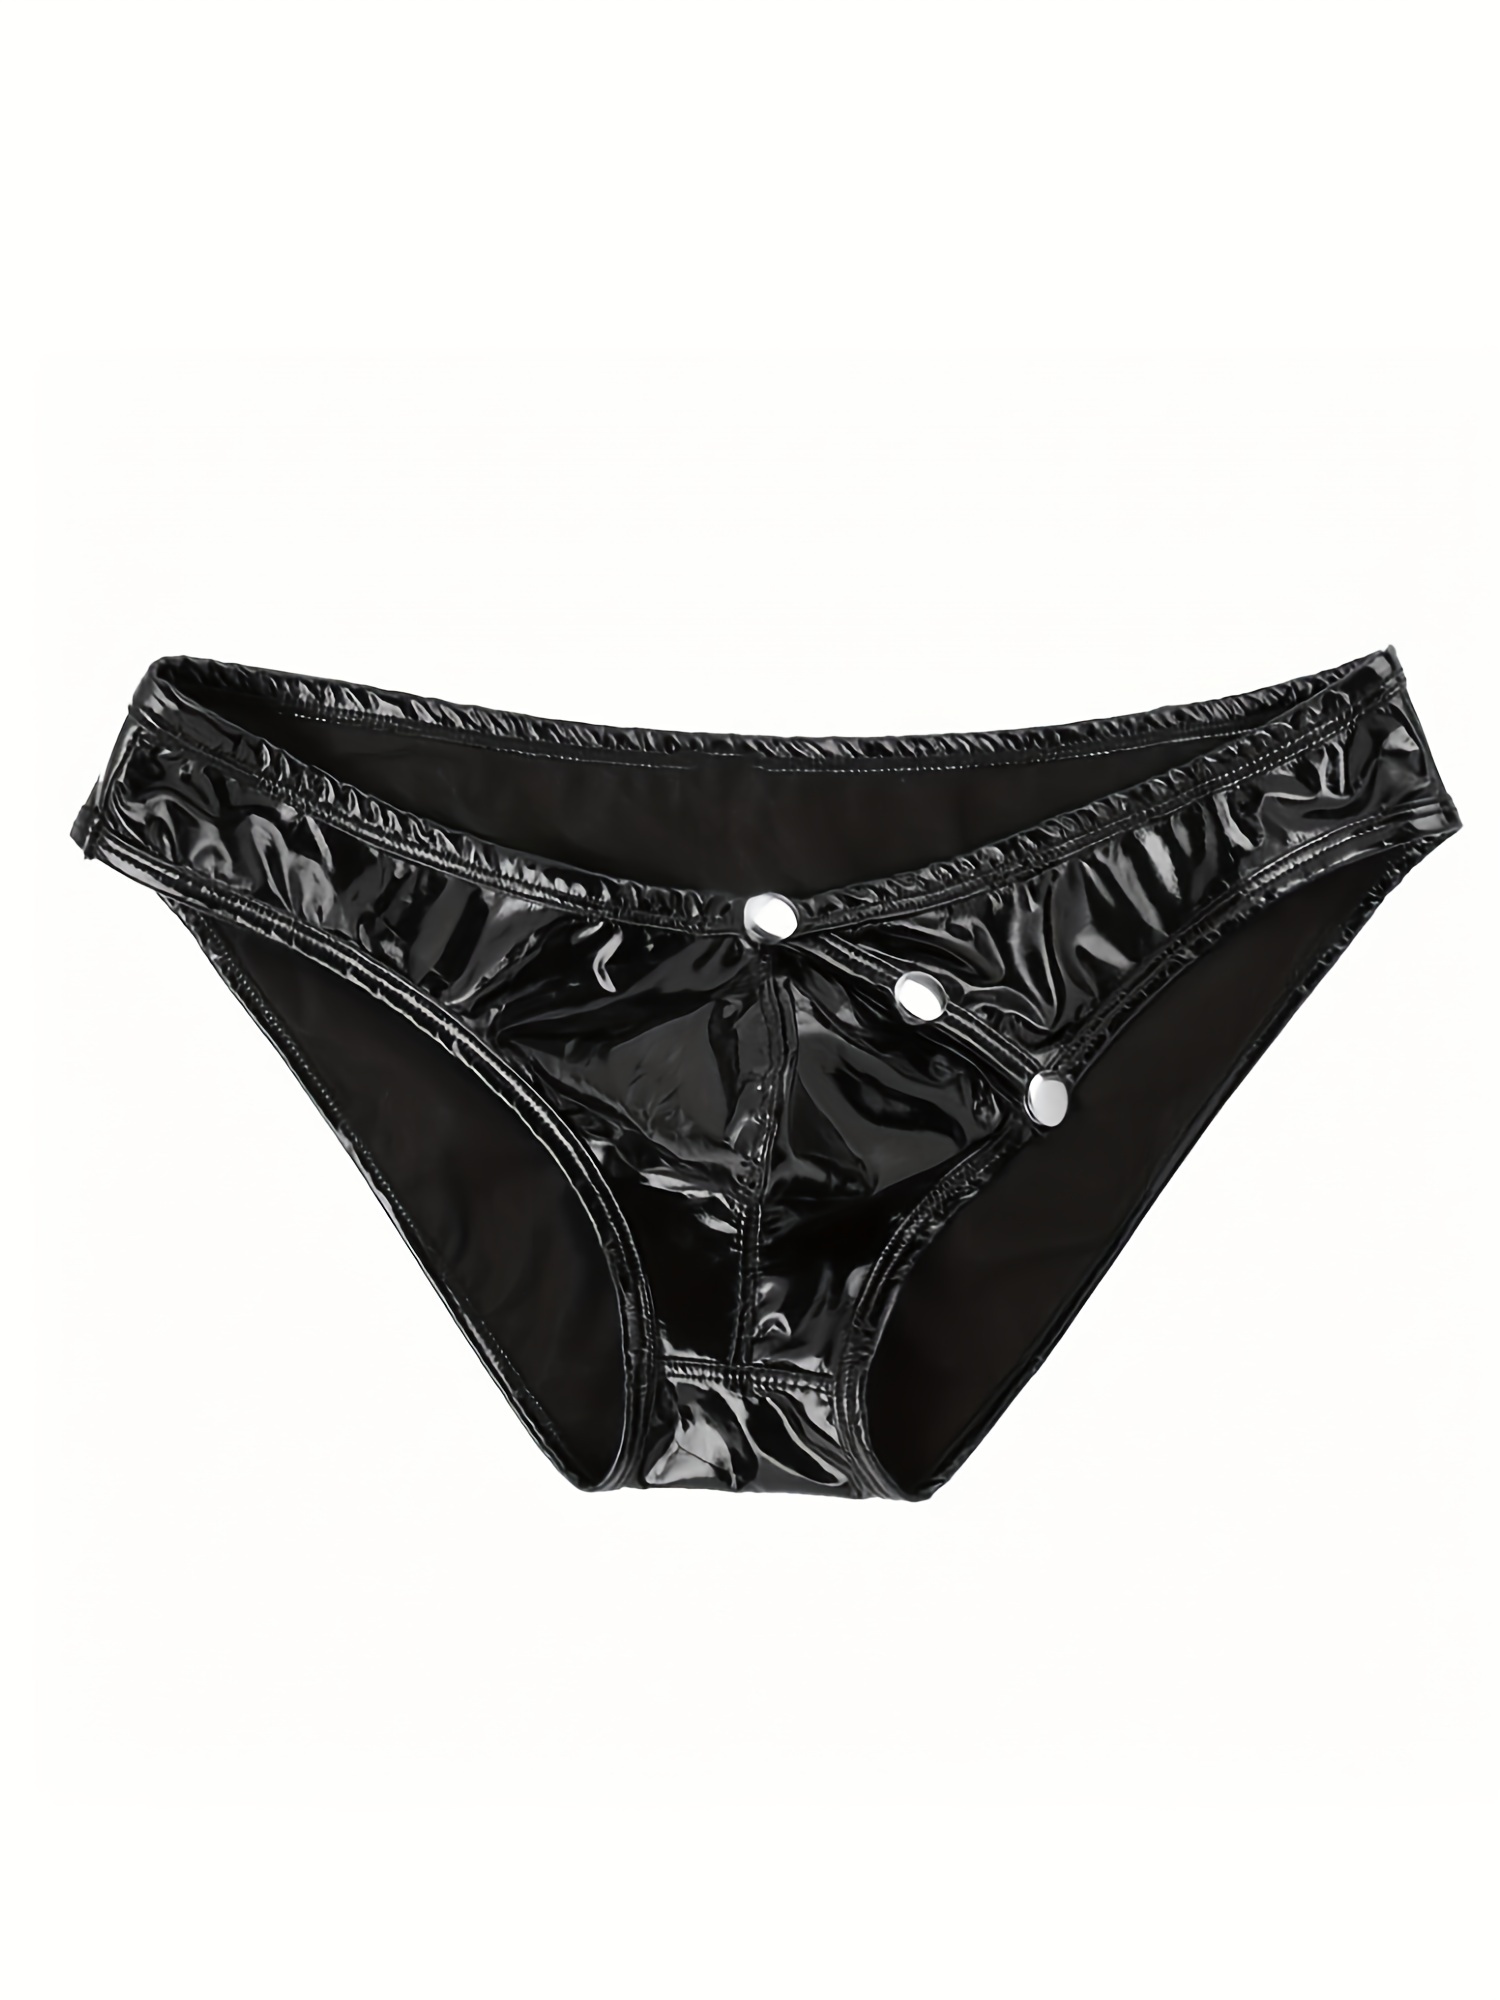 Women Sexy Lingerie Thong Briefs Leather Panties Knicker Underwear